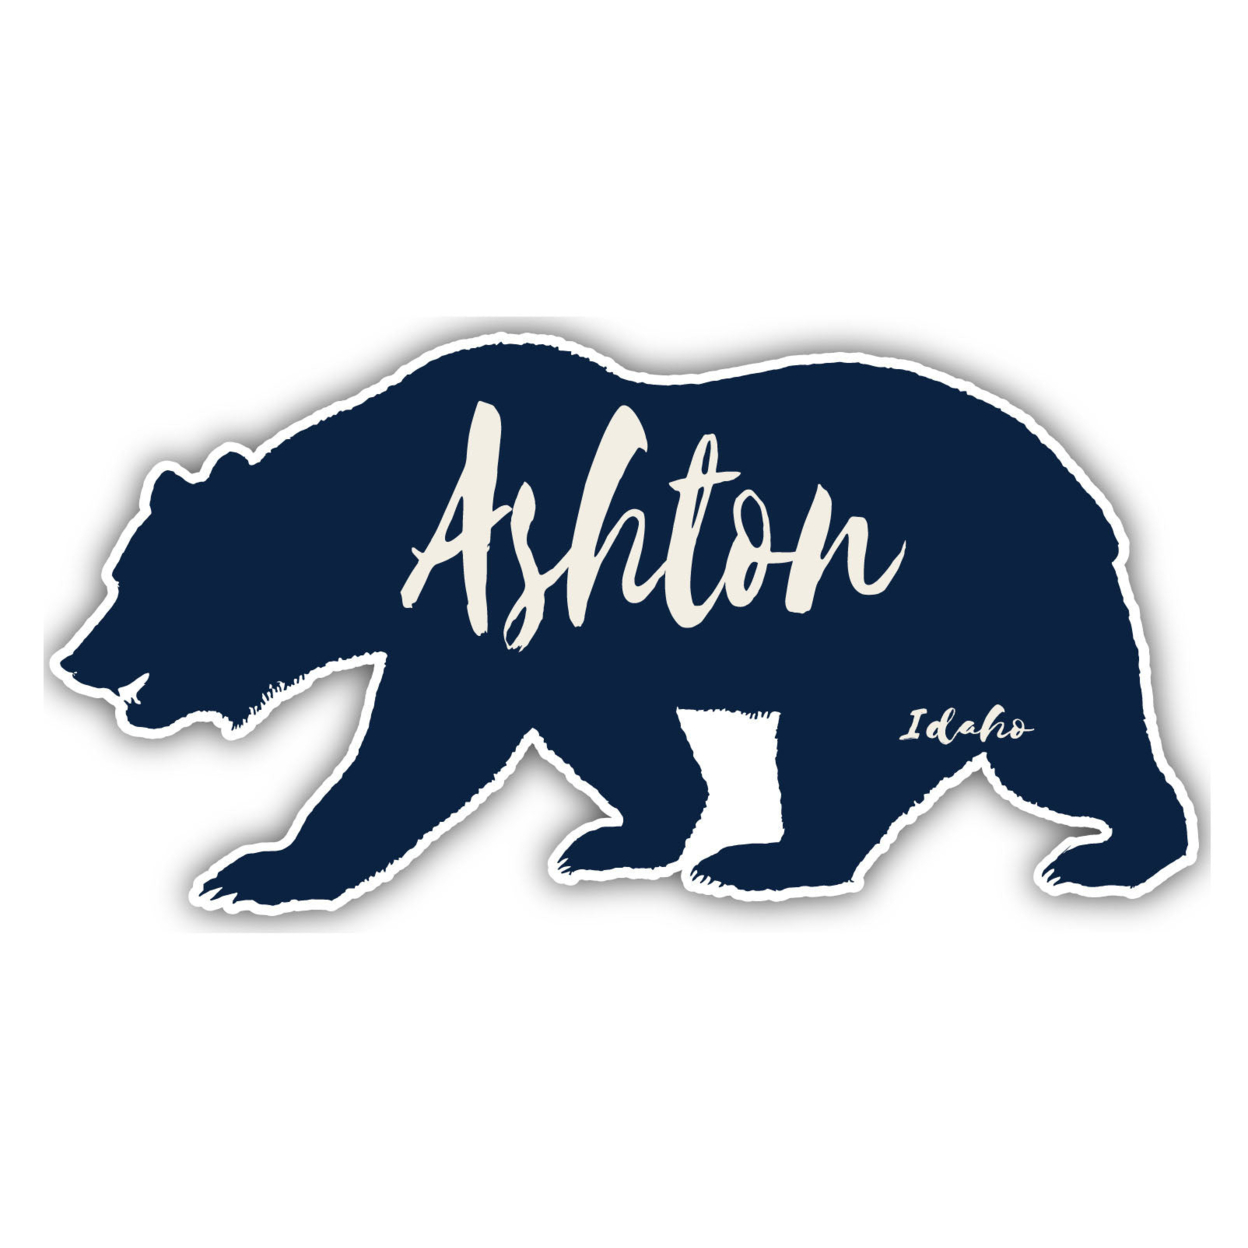 Ashton Idaho Souvenir Decorative Stickers (Choose Theme And Size) - Single Unit, 2-Inch, Bear